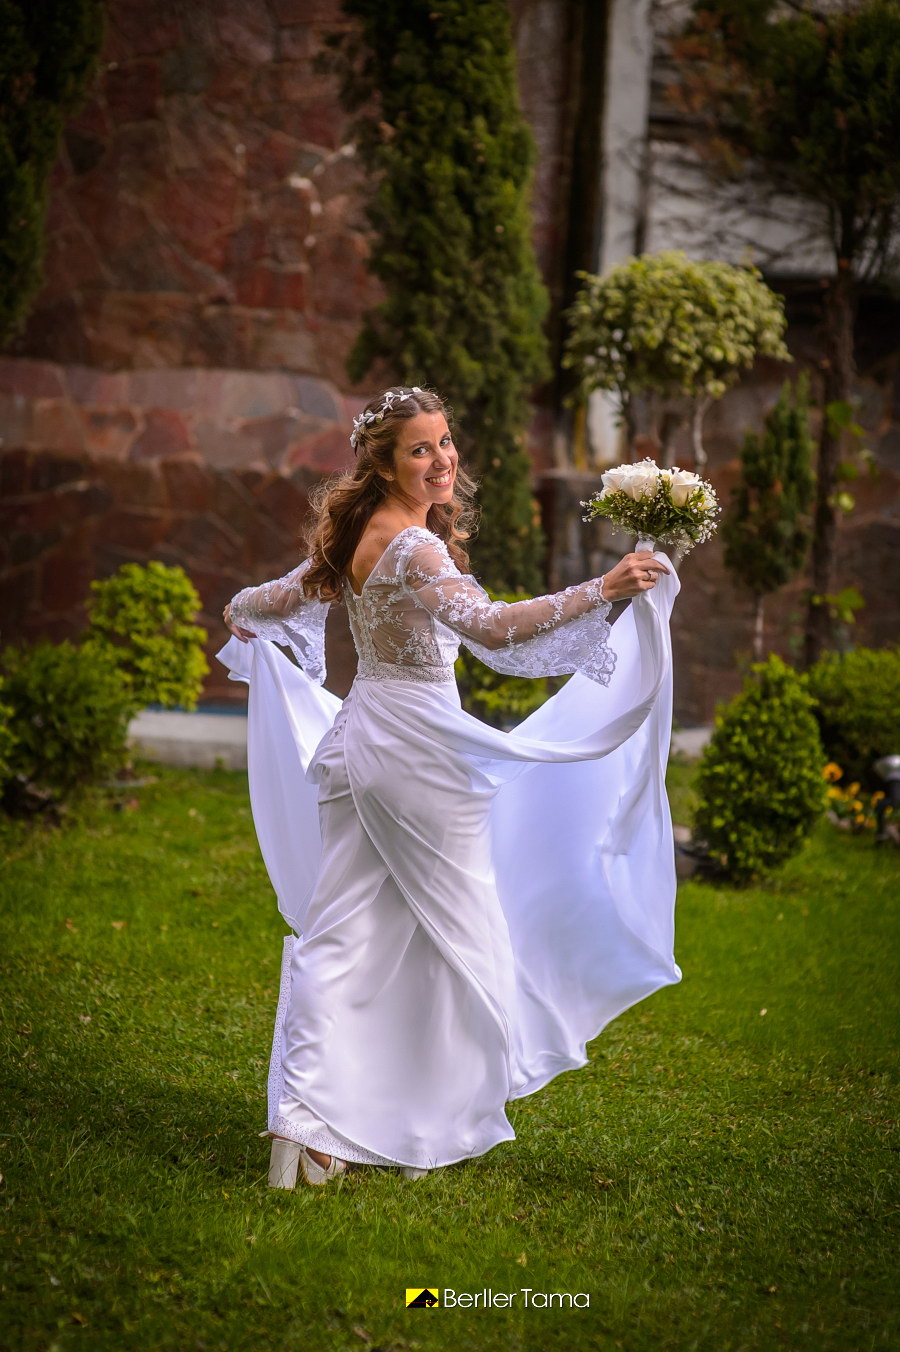 https://berllertama.com fotografia de casamientos wedding photo